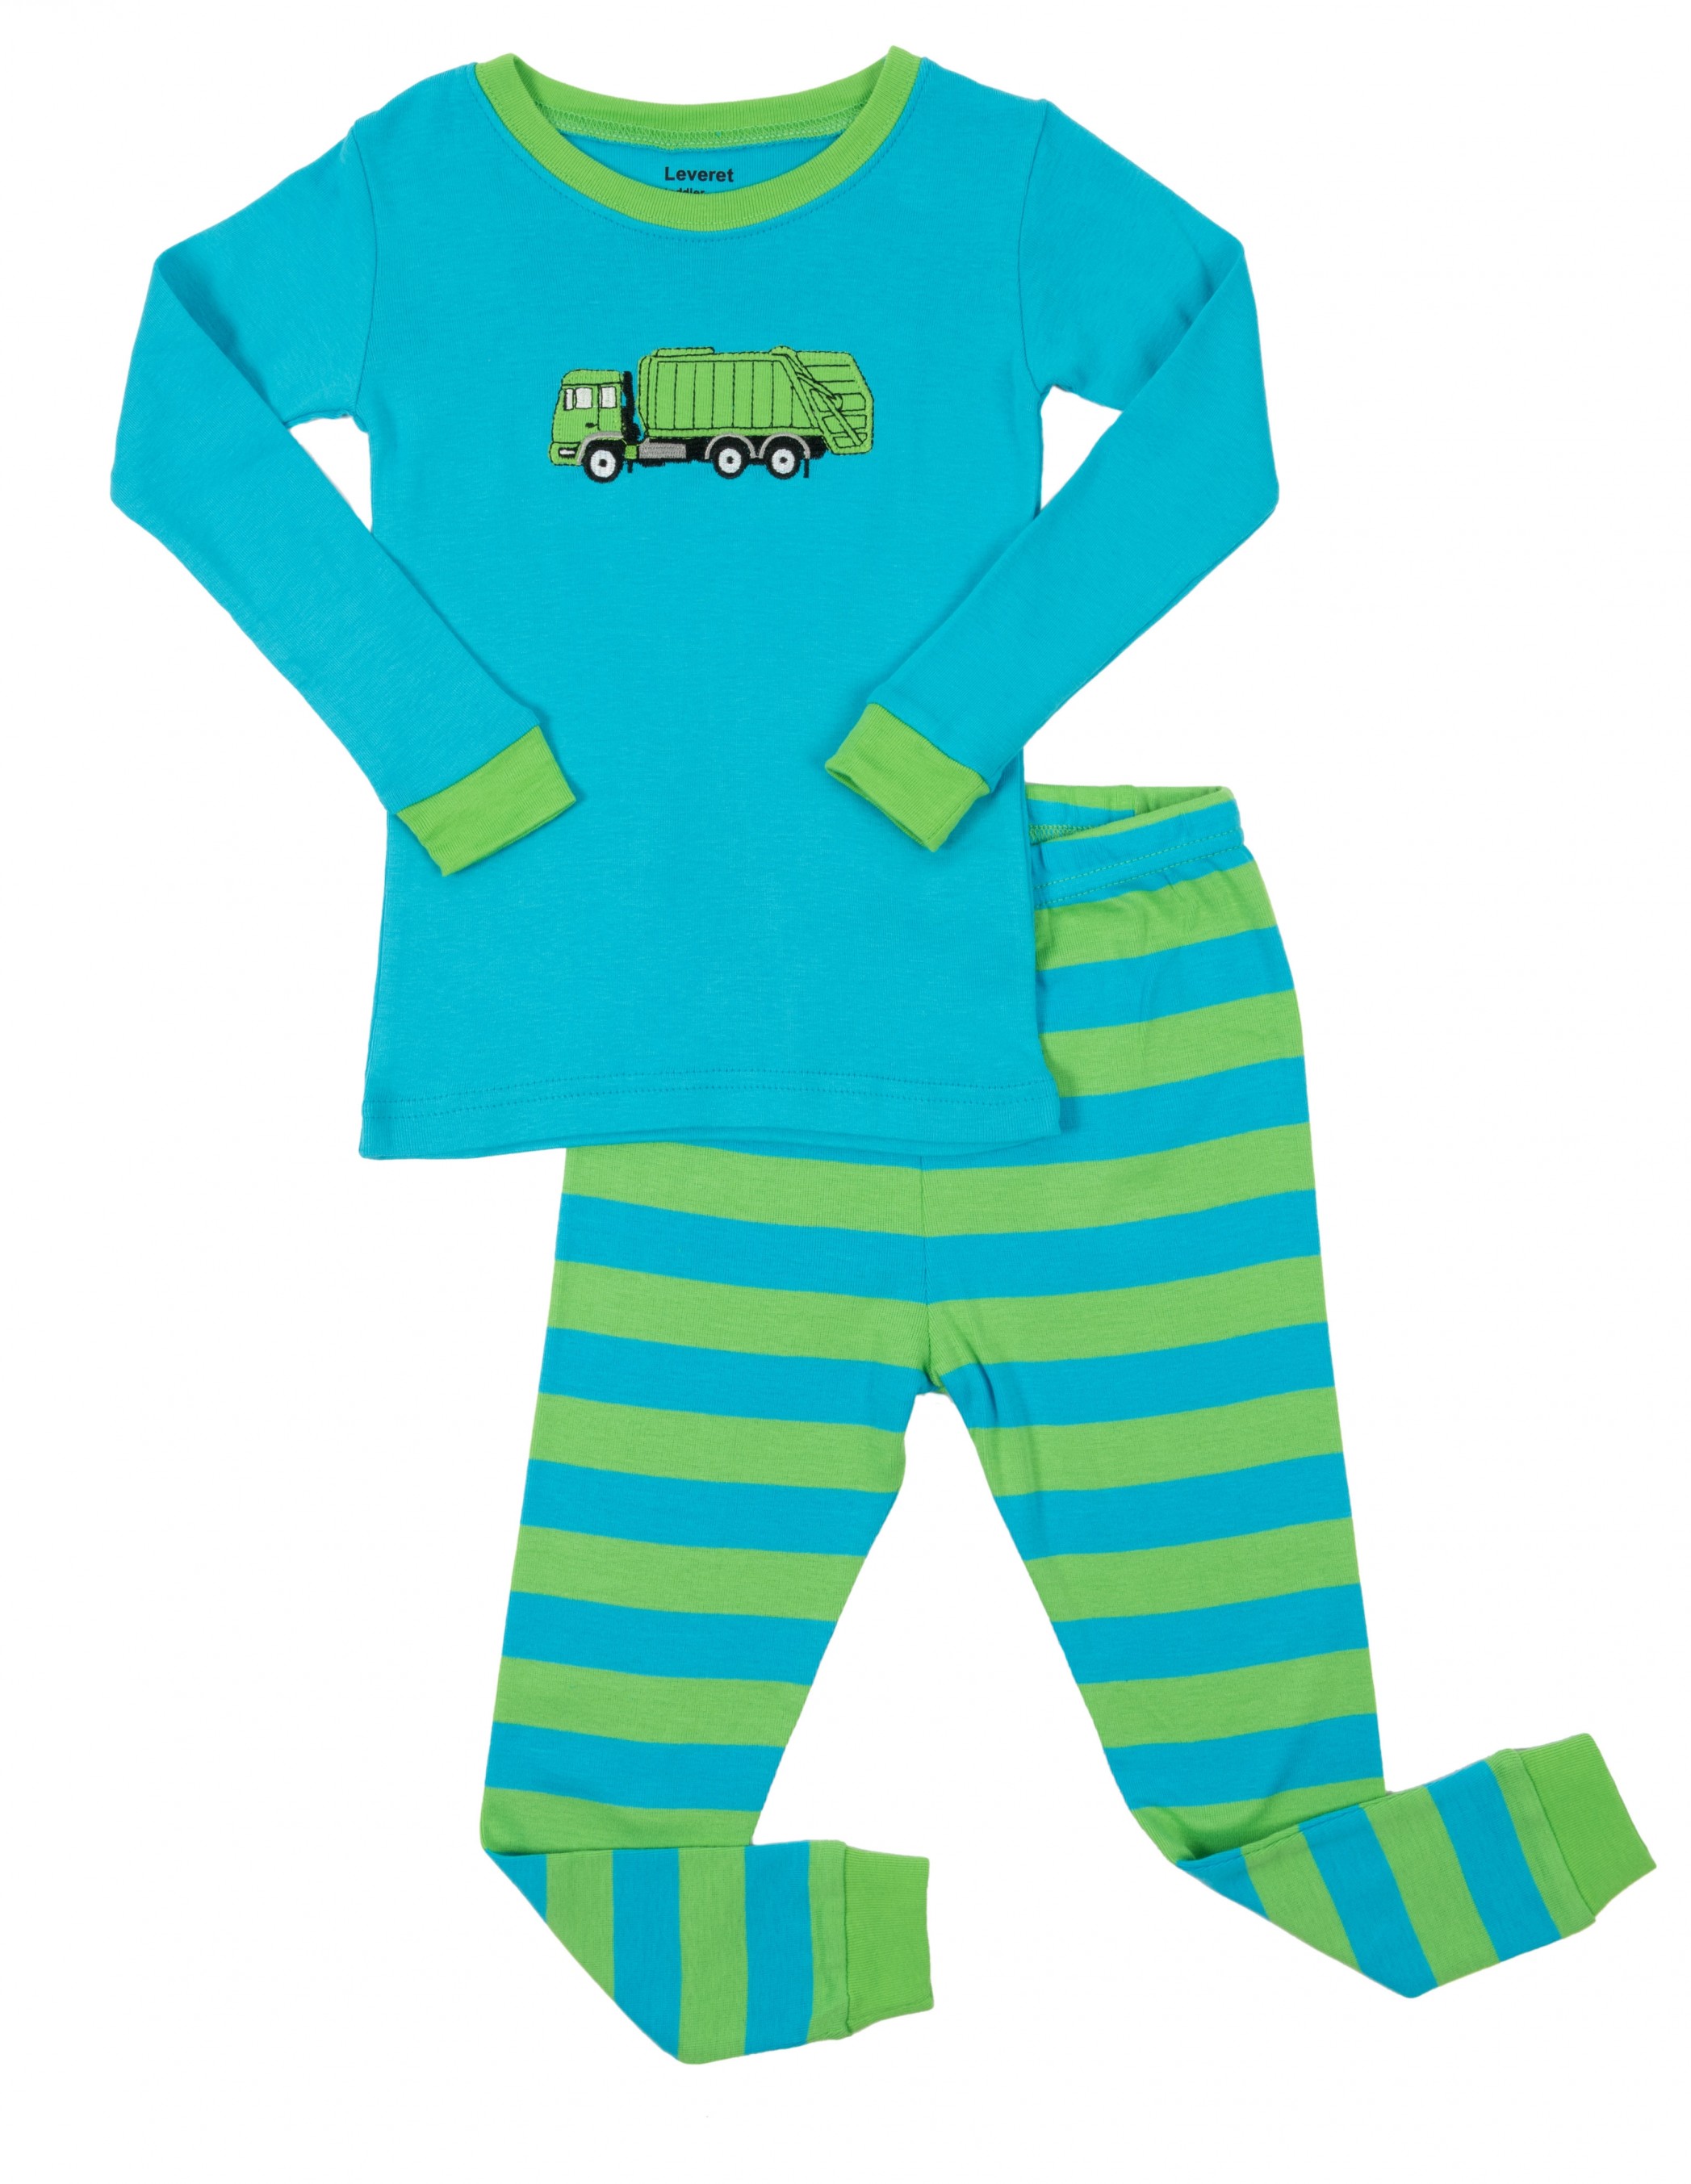 Leveret Kids & Toddlers Boys Garbage Truck 2 Piece Cotton Pajama Set (6M-14Y